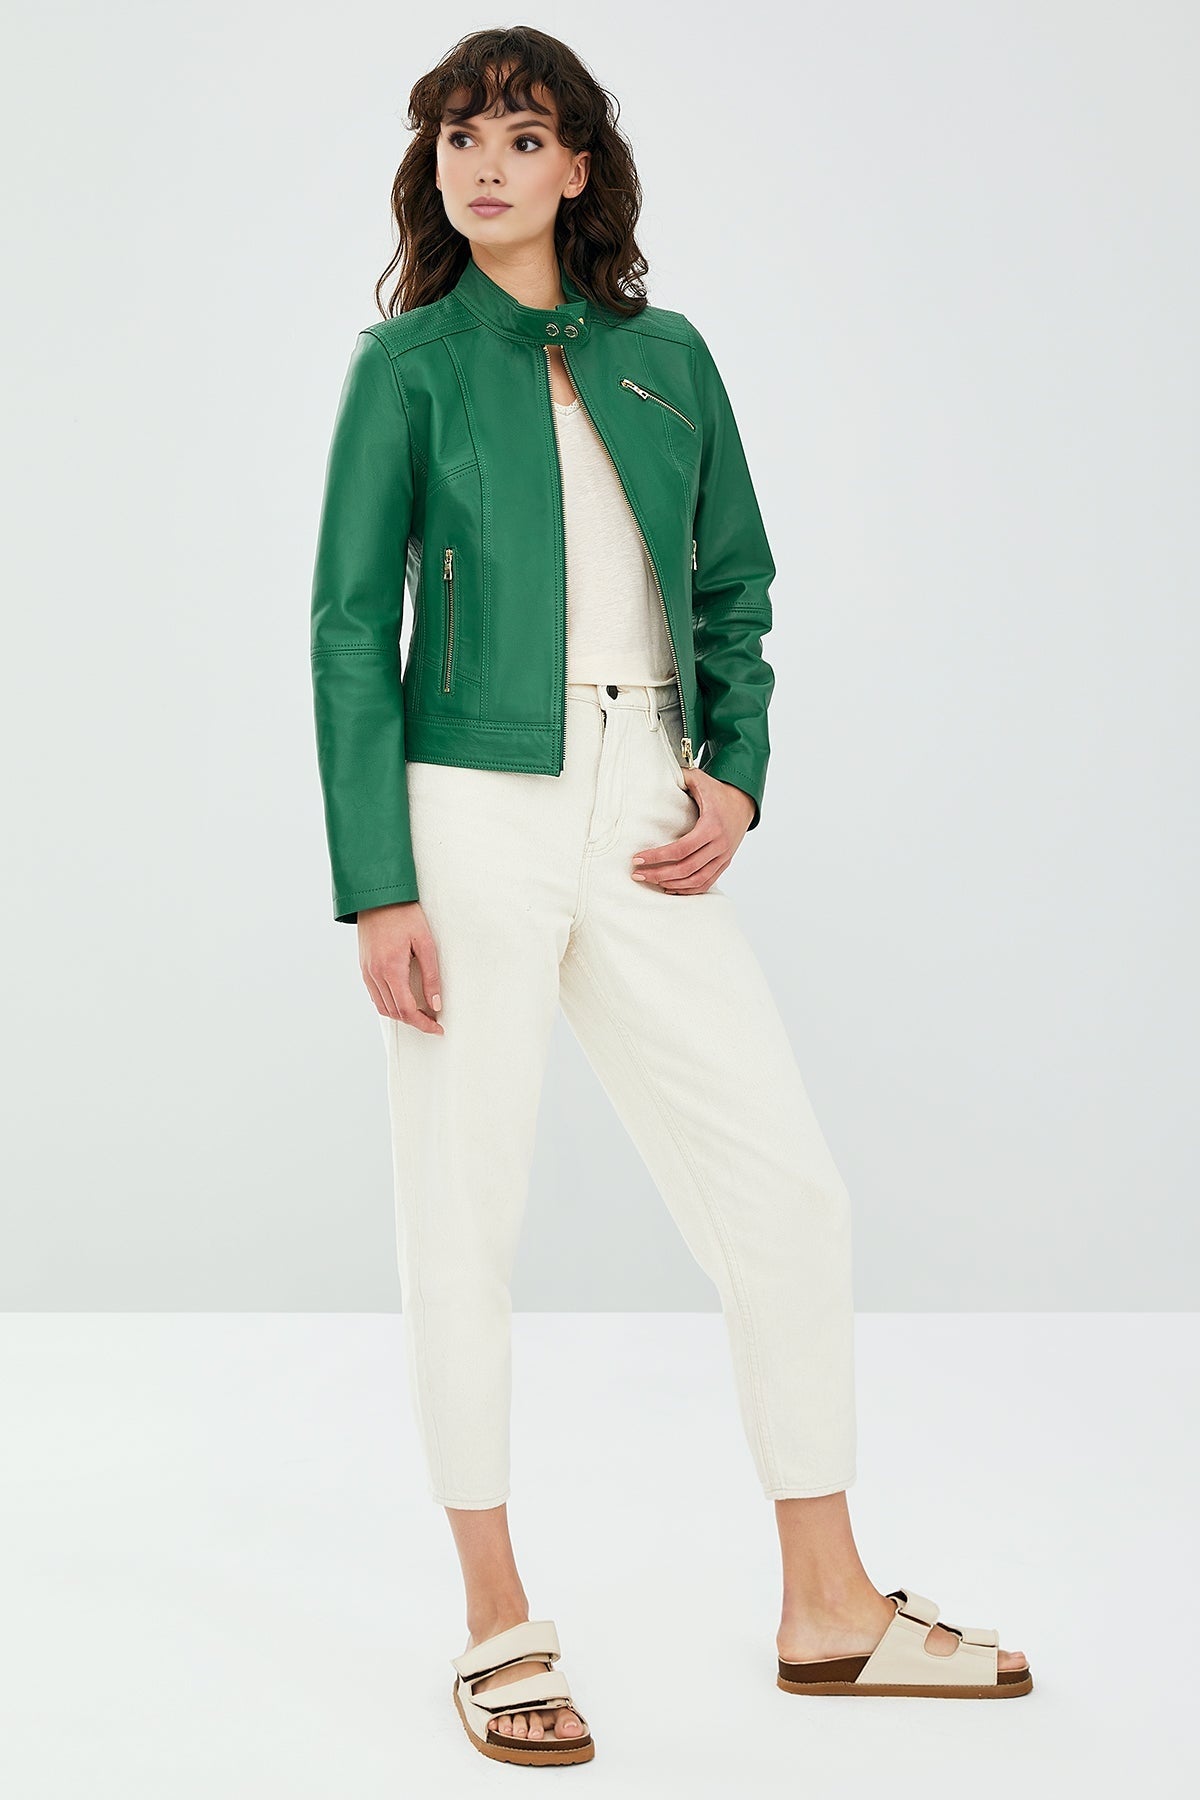 Kylie Women's Green Leather Jacket